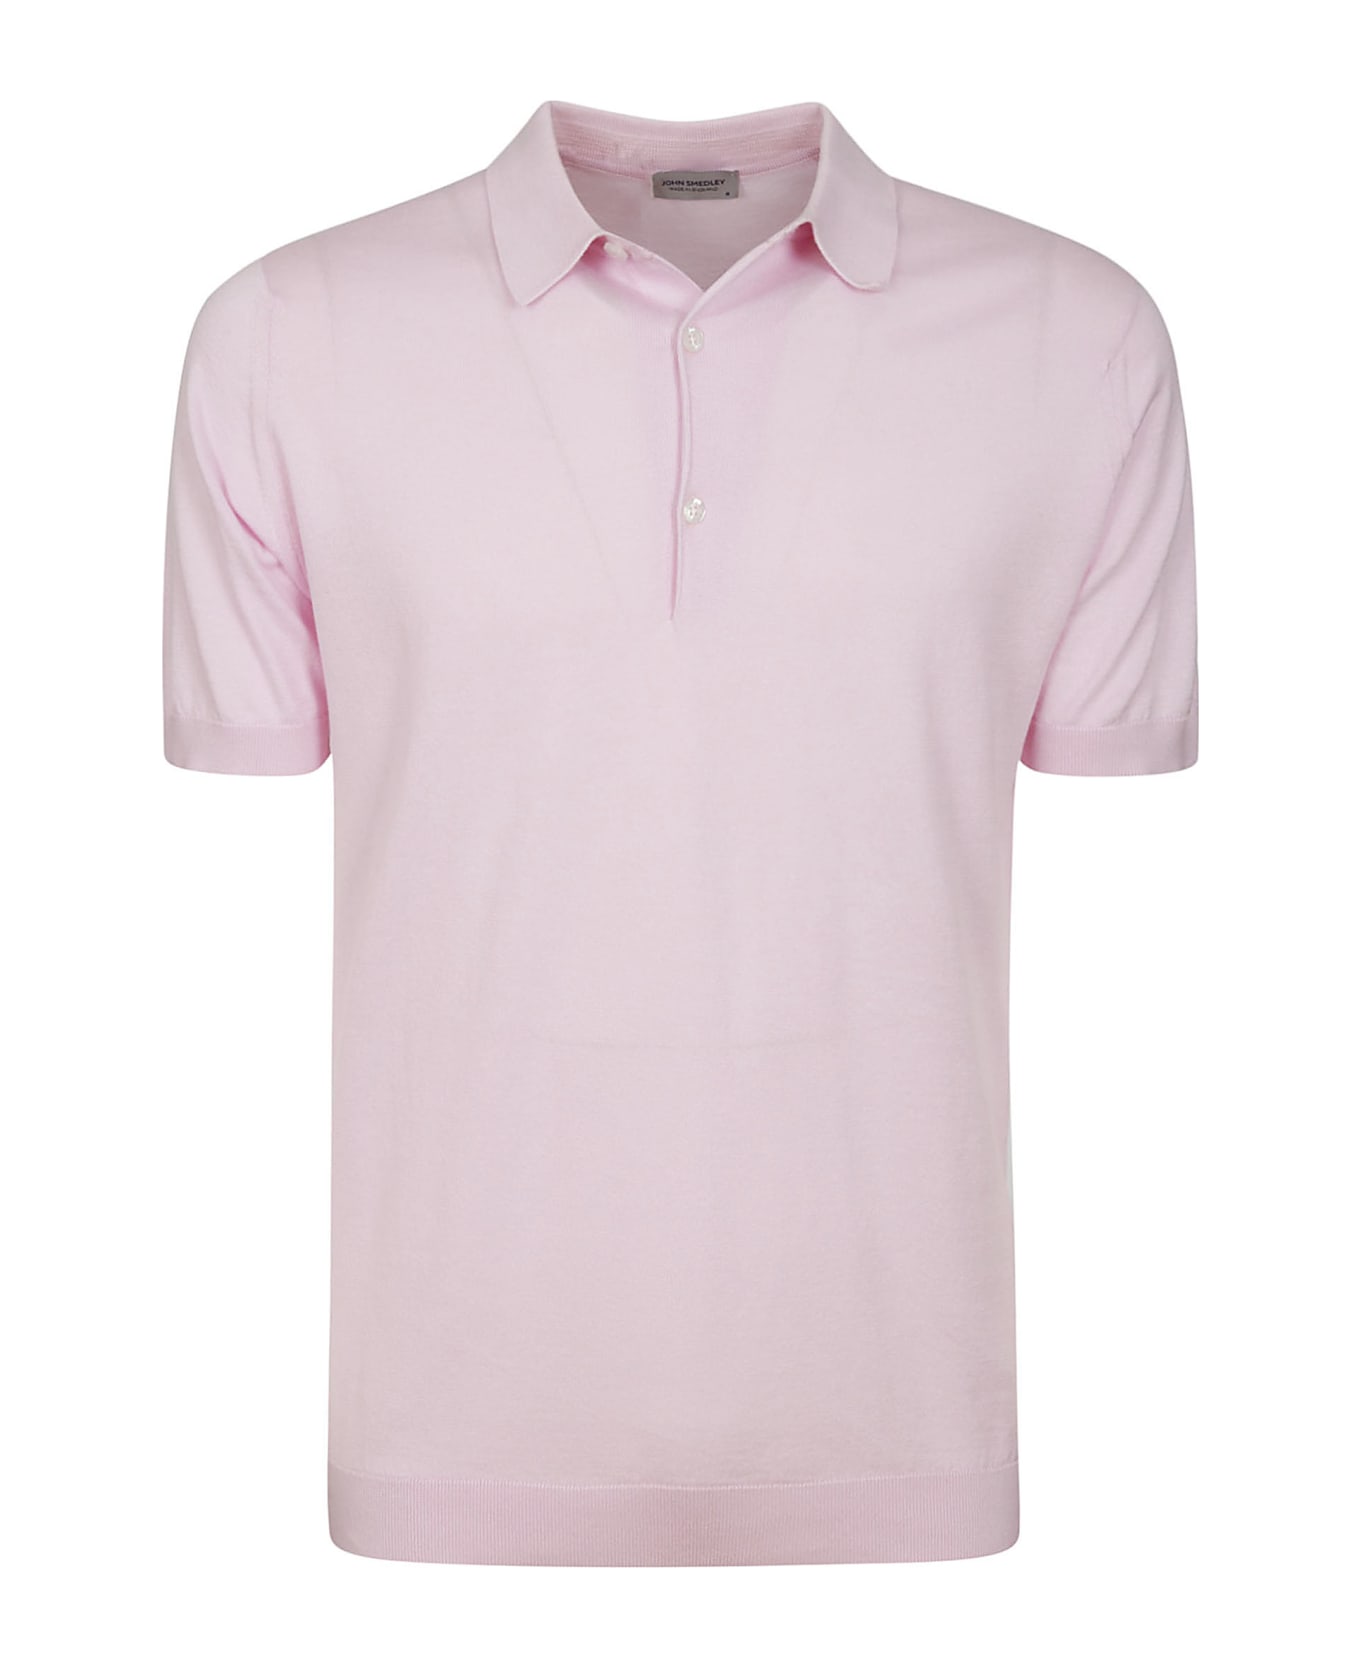 John Smedley Adrian Shirt Ss - Mallow Pink ポロシャツ